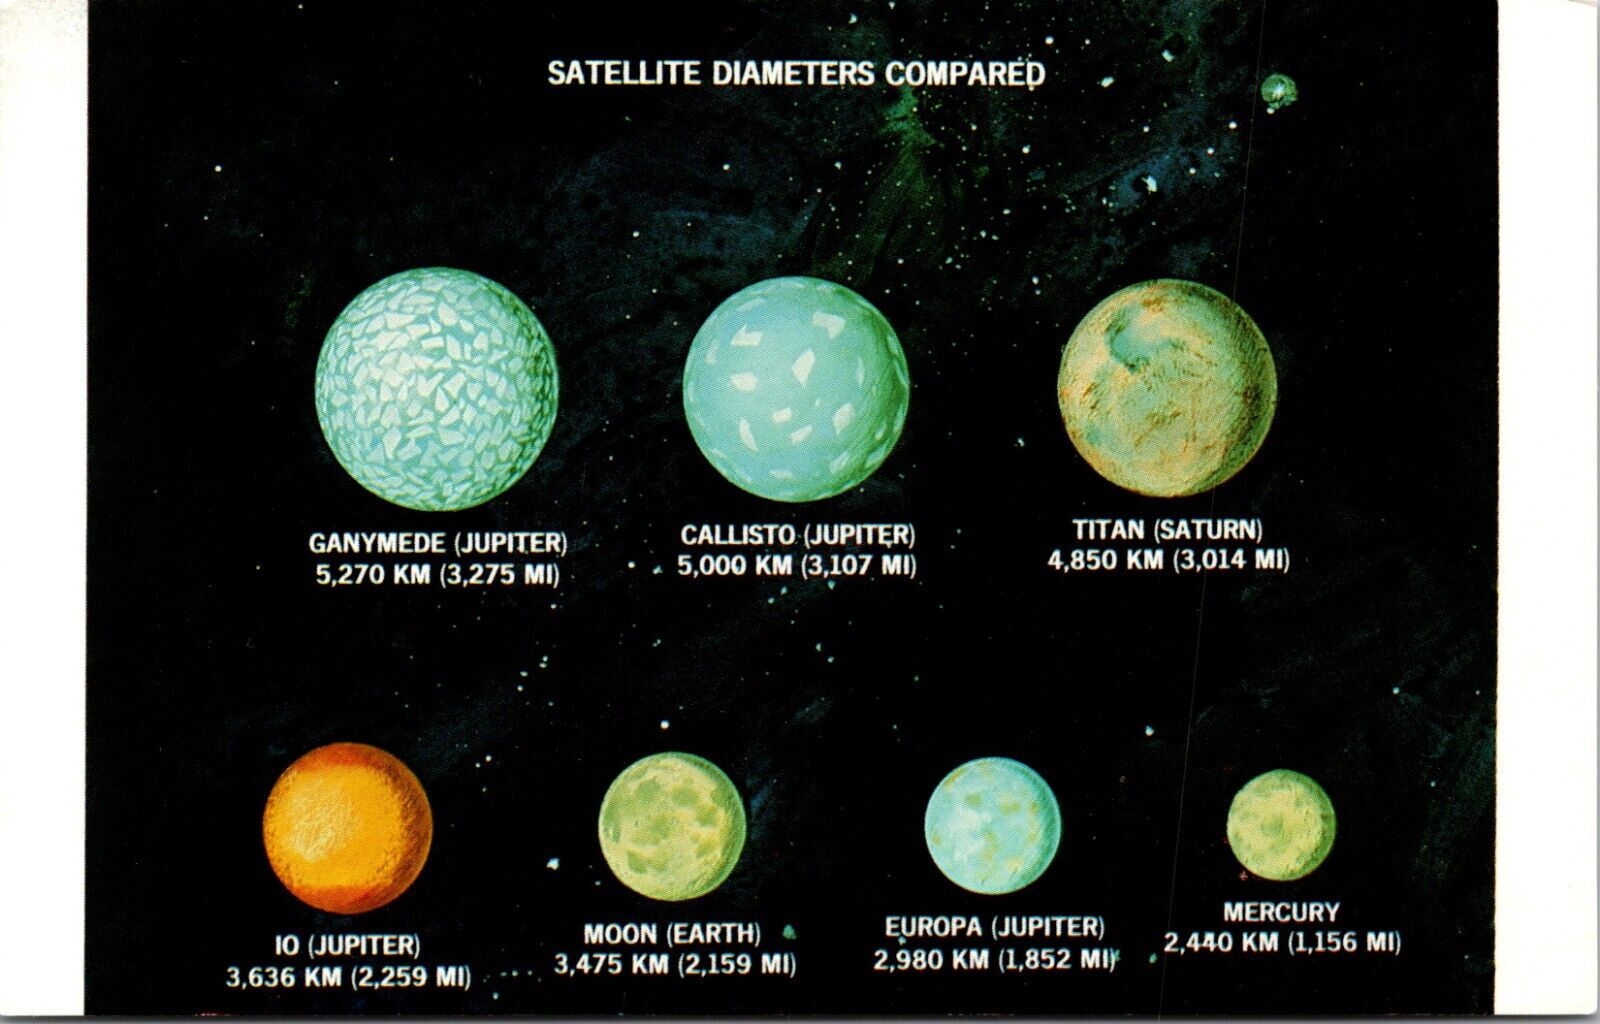 Satellite Diameters Compared Ganymede Callisto Titan IO Moon Europa Postcard